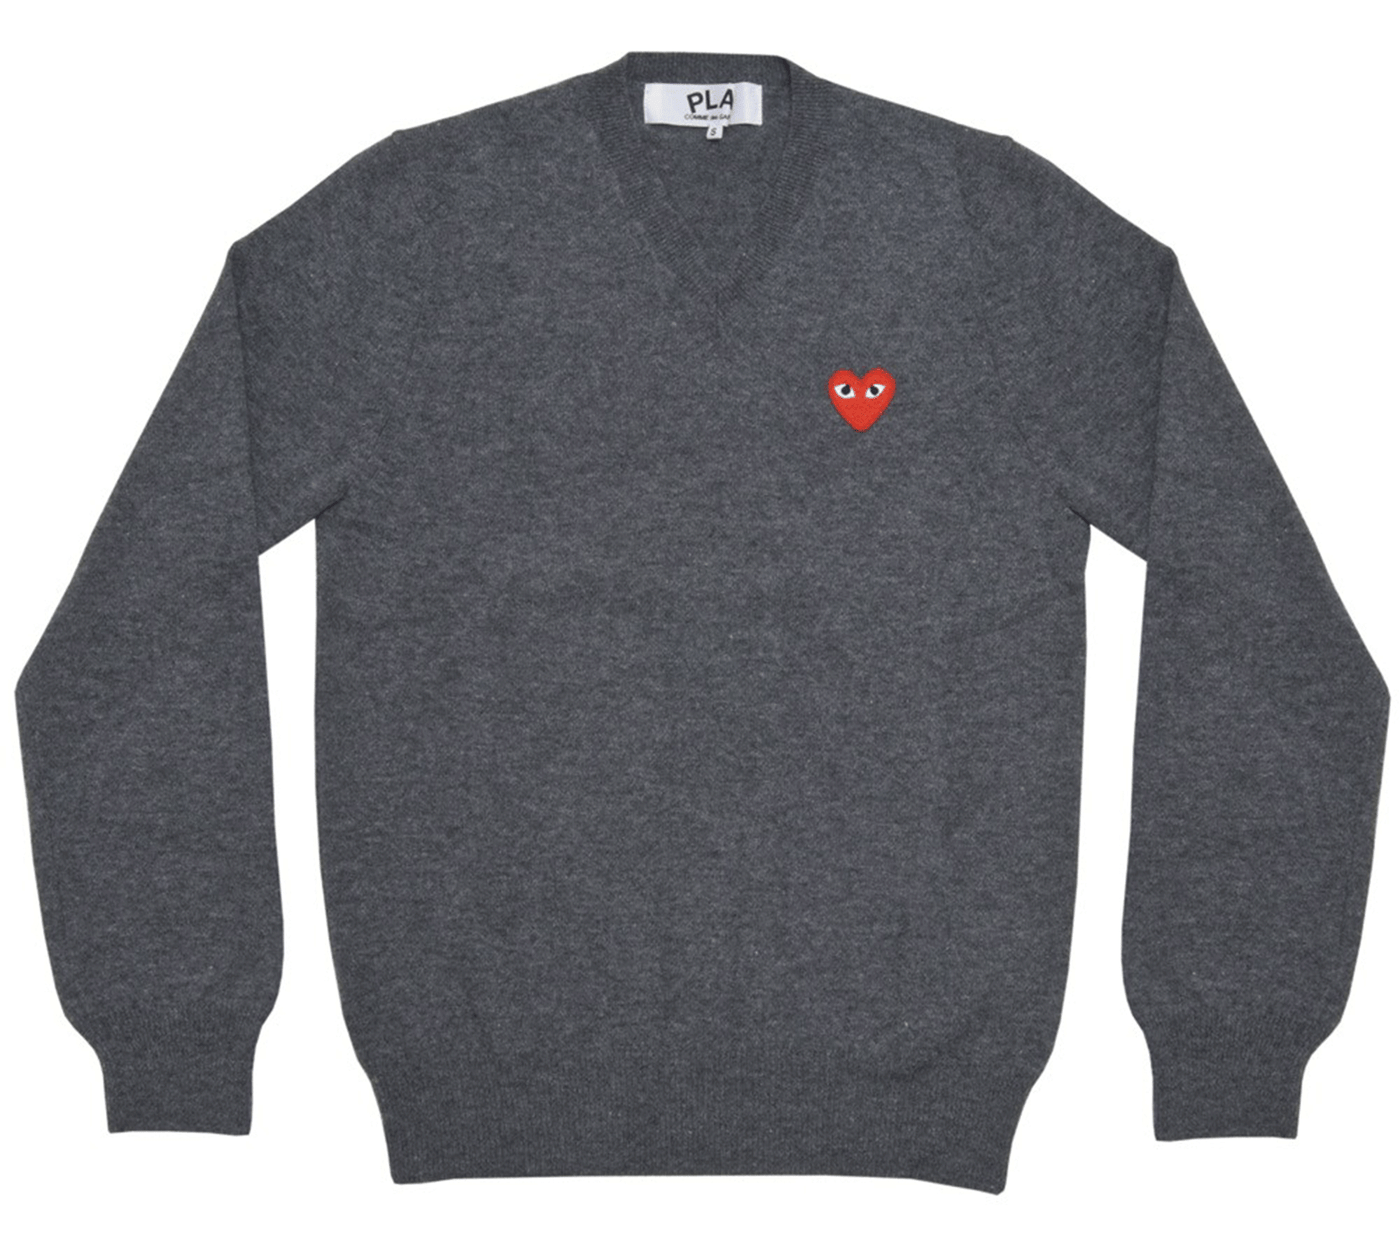 Comme-des-Garcons-PlayComme-des-Garcons-Play-Red-Heart-Sweater-Men-Grey-1